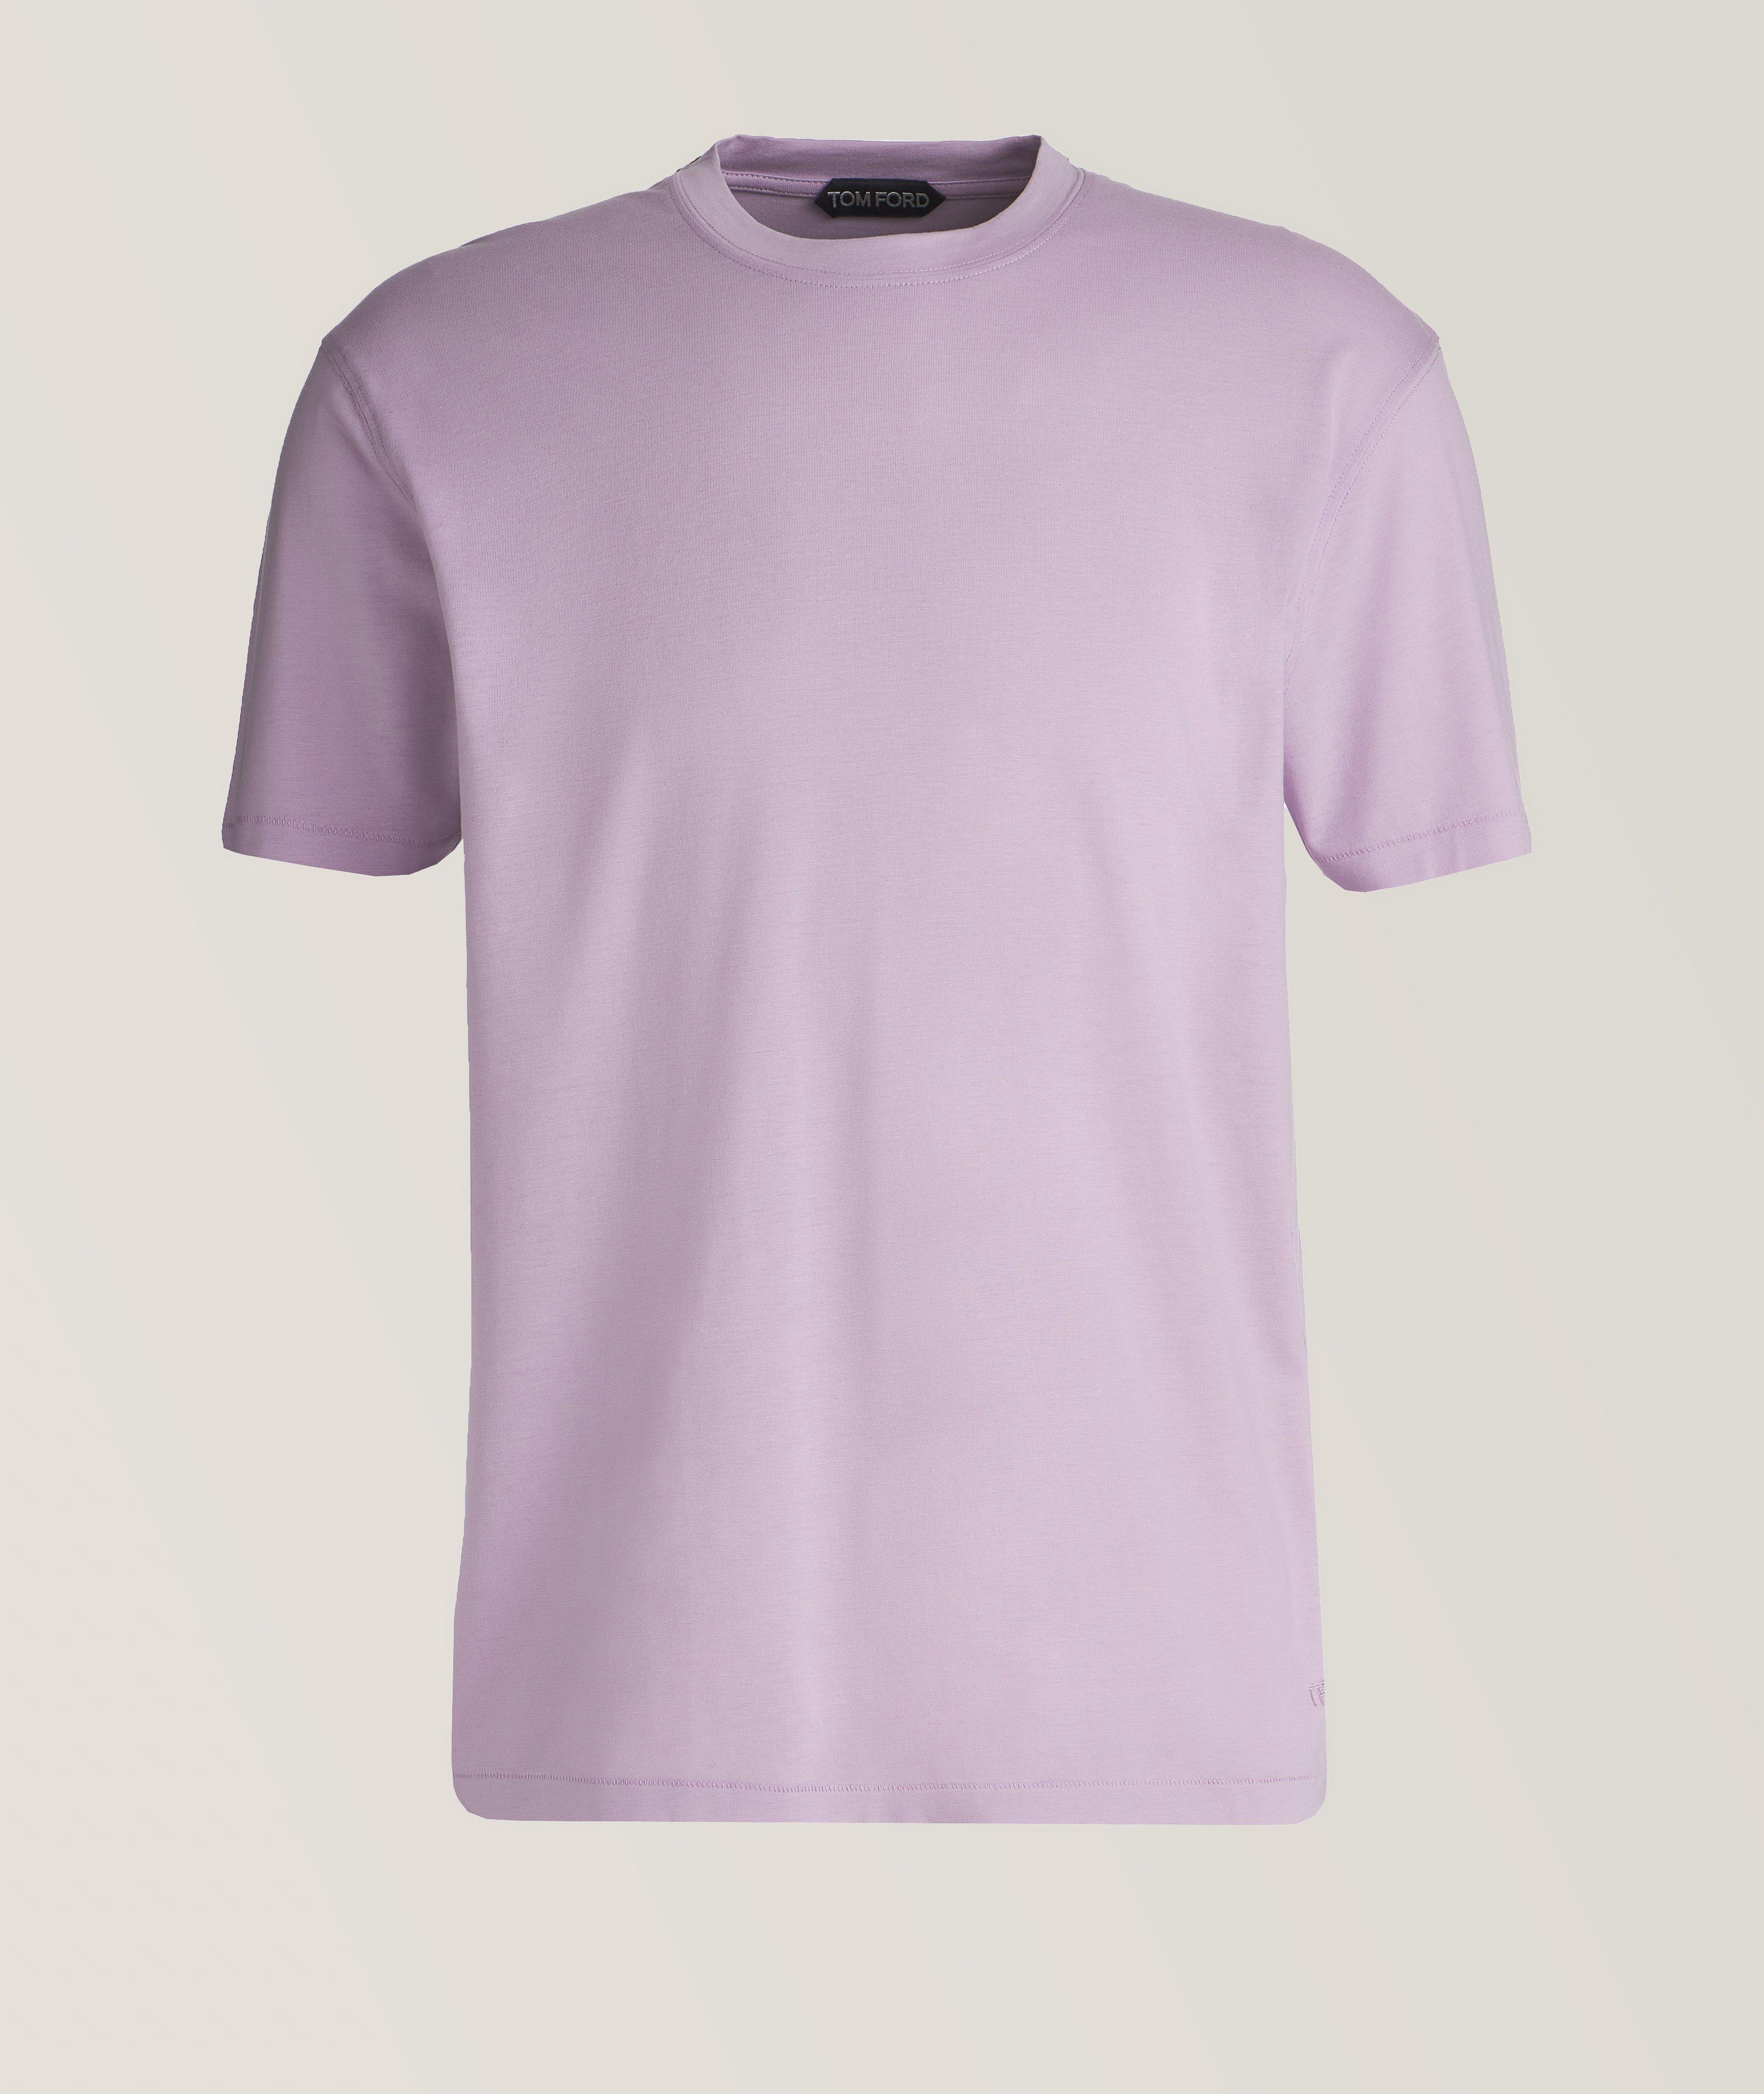 Lyocell-Cotton Crewneck T-Shirt image 0